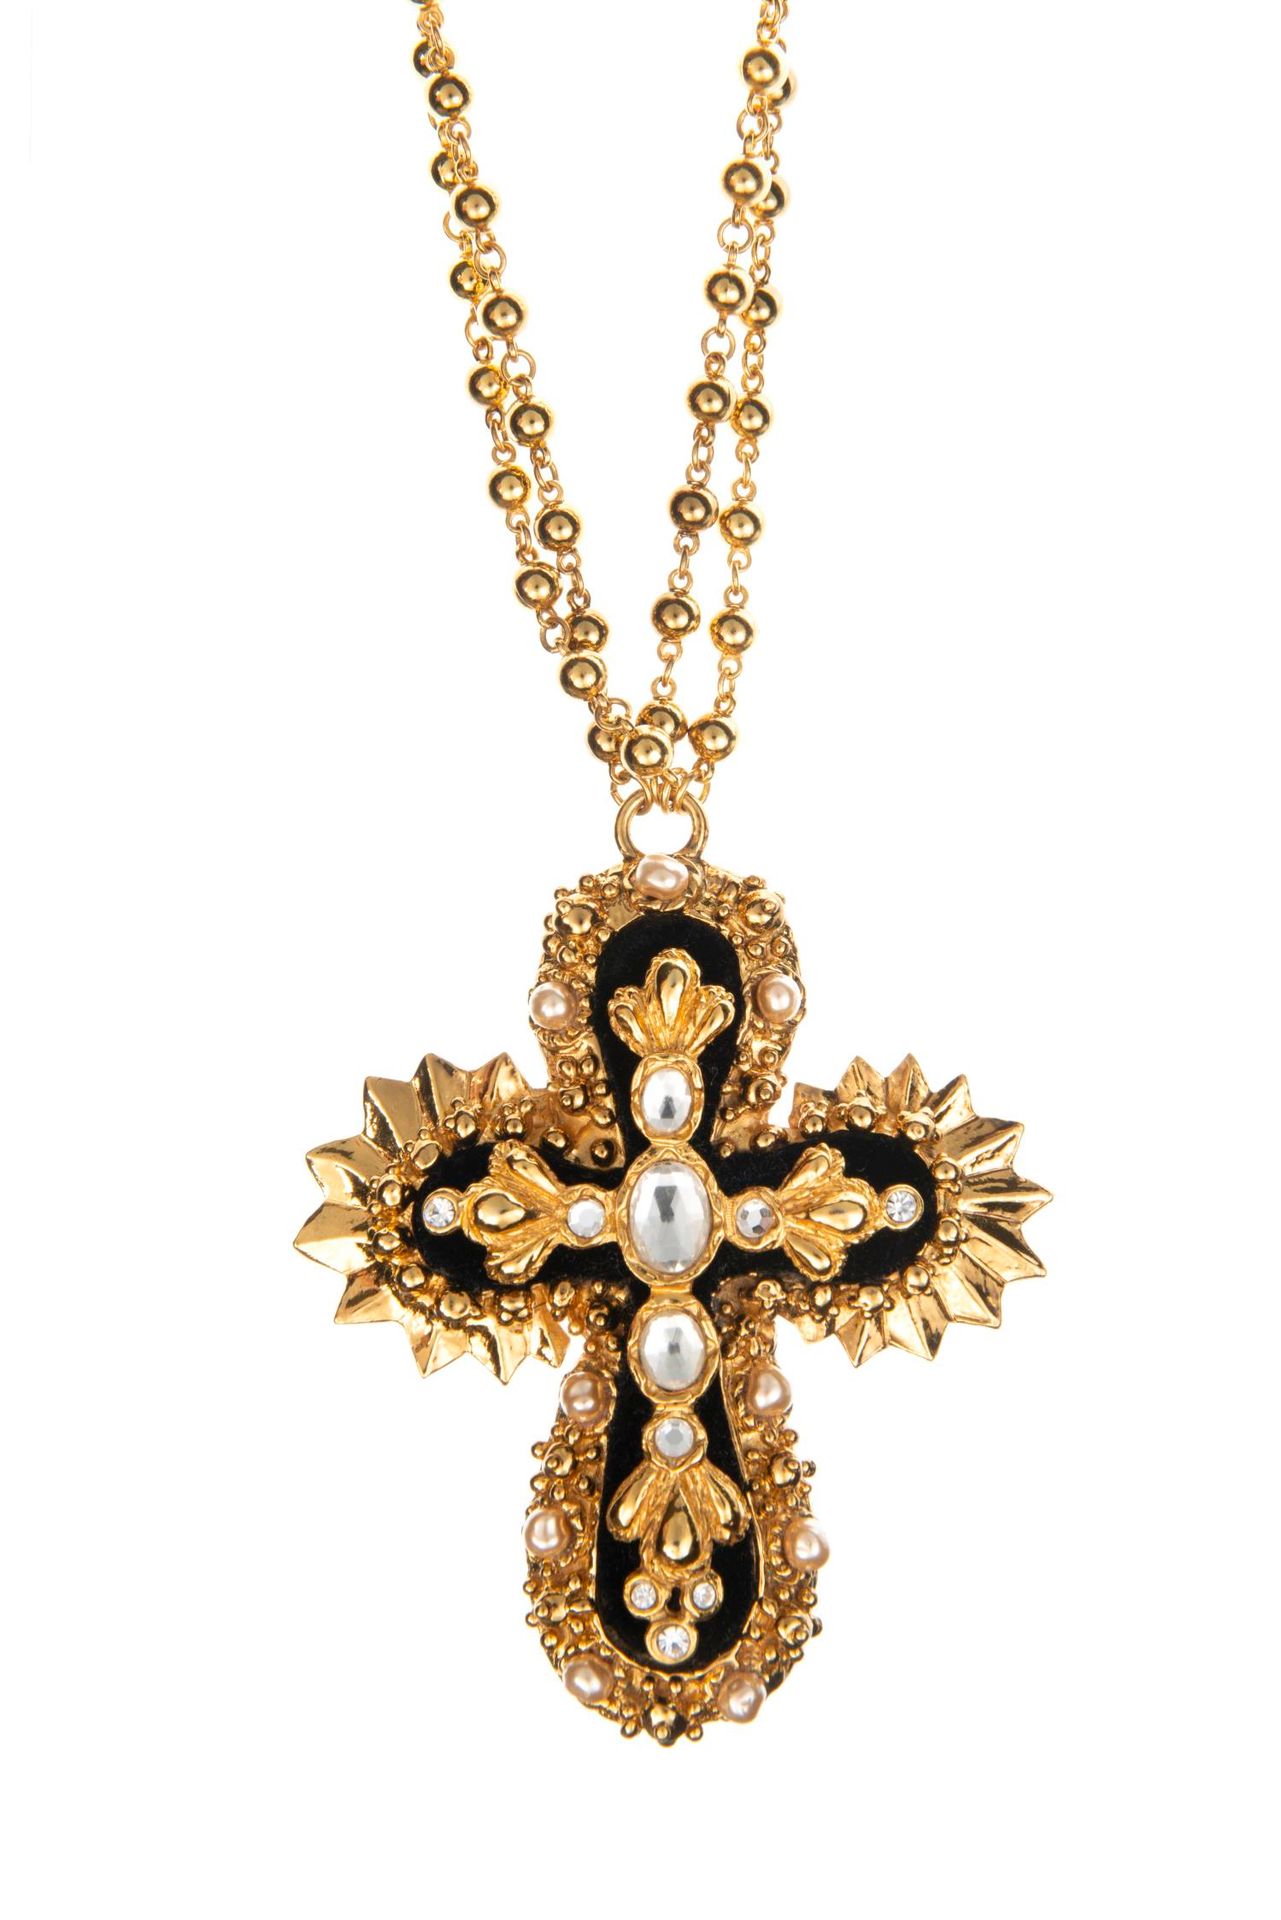 Null 克里斯蒂安-拉克鲁瓦（Christian Lacroix）带十字勋章的项链和一对耳环，连同其纸箱一起出售，约1970年